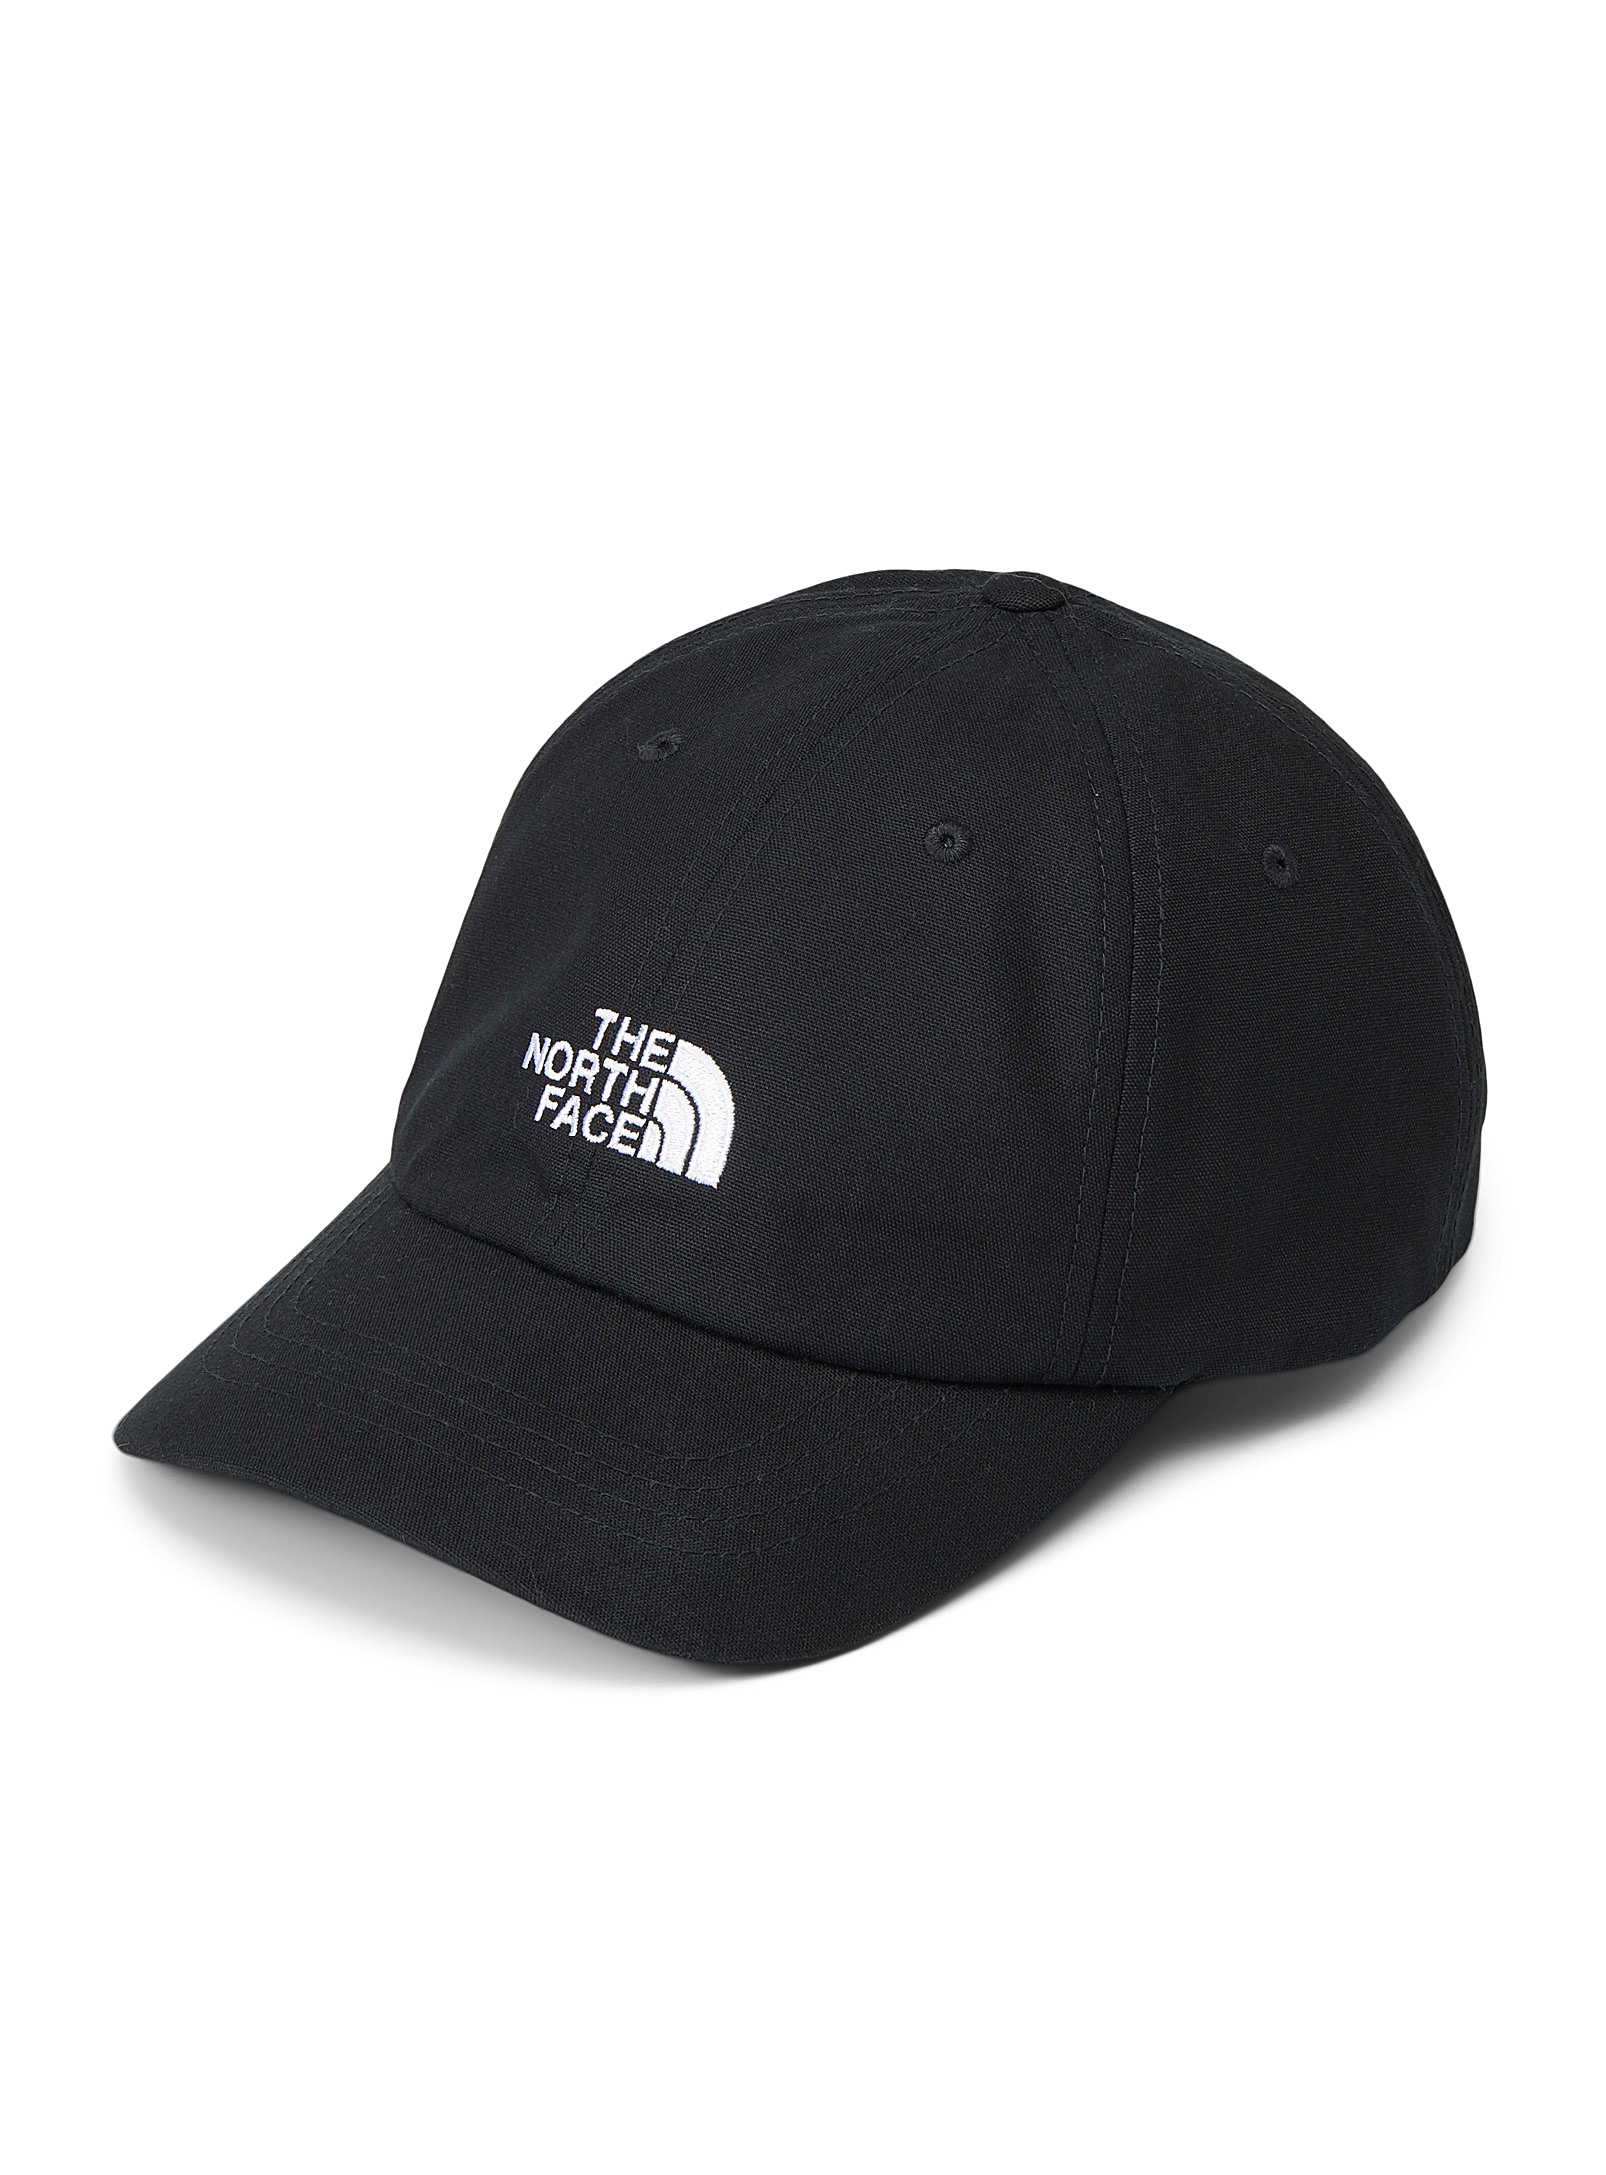 The North Face Logo Dad Cap In Black